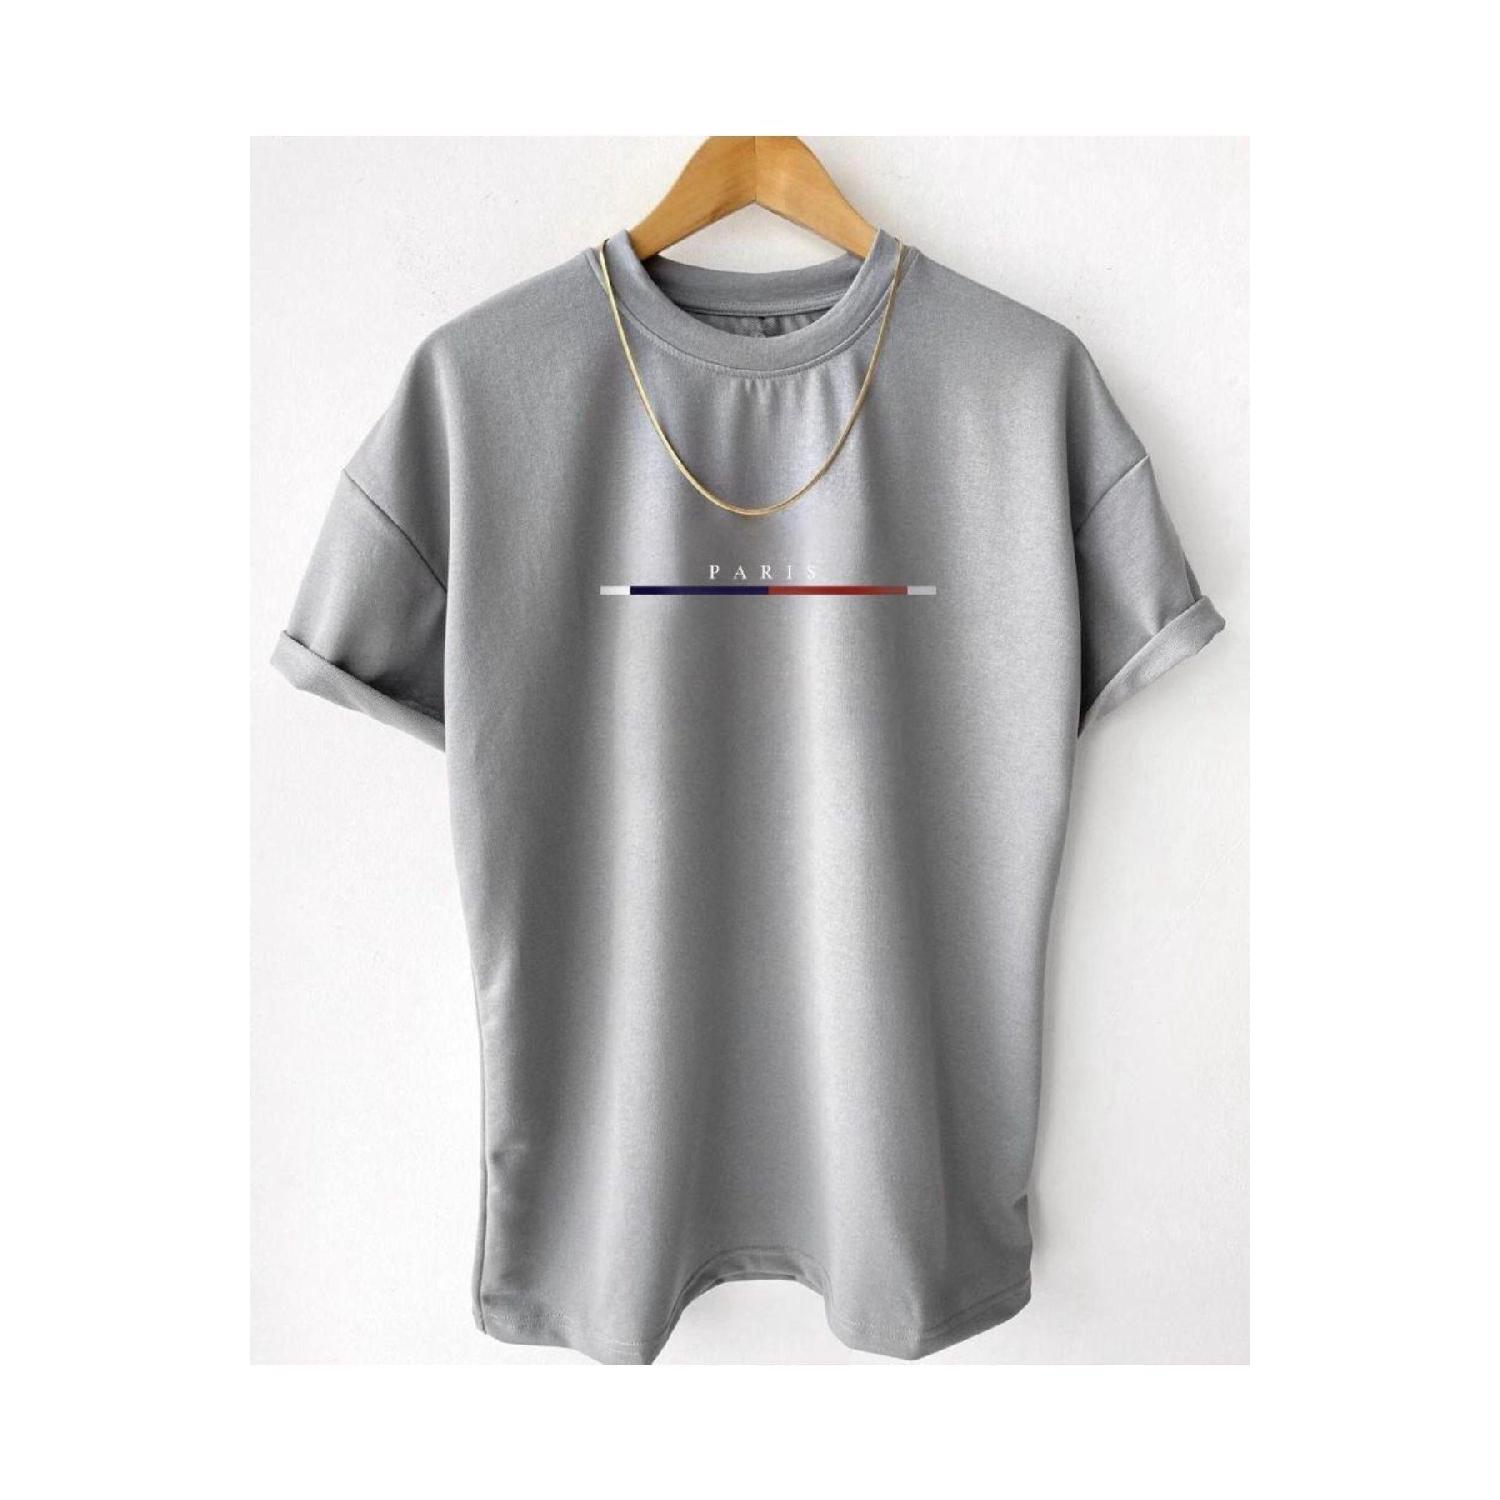 Santra Sports Wear Men's Gray Chest Slim Striped Paris Printed Oversize Crew Neck T-shirt